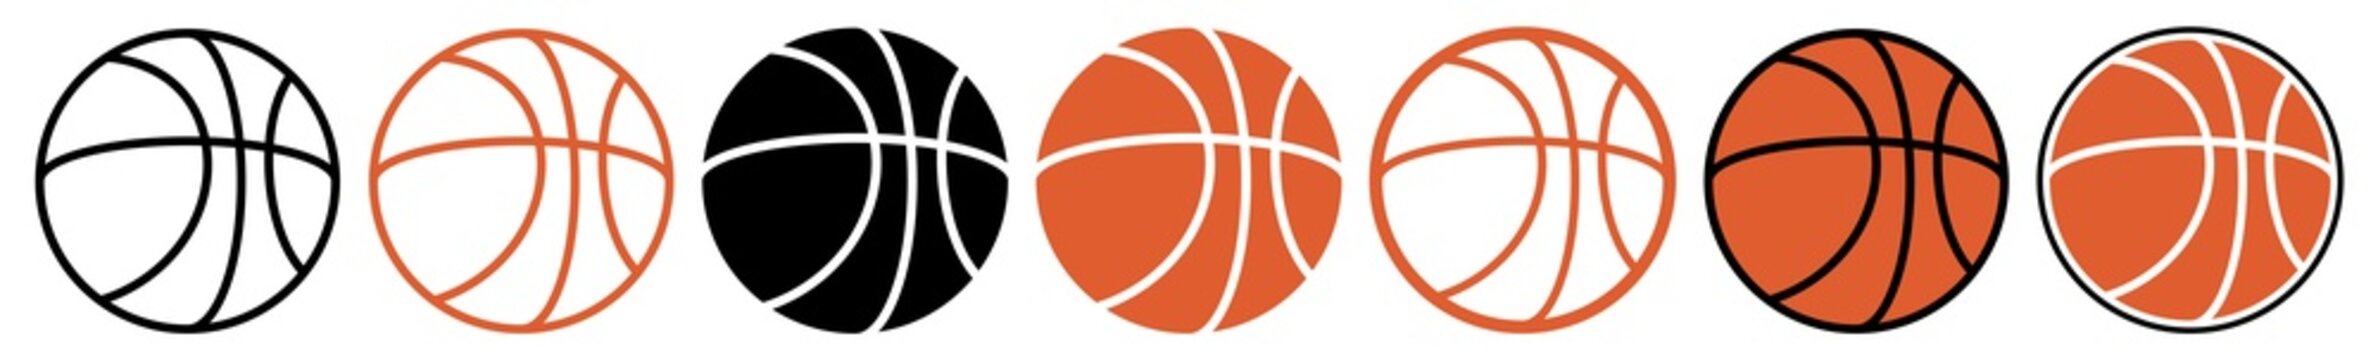 Basketball | Ball | Emblem | Logo | Variations